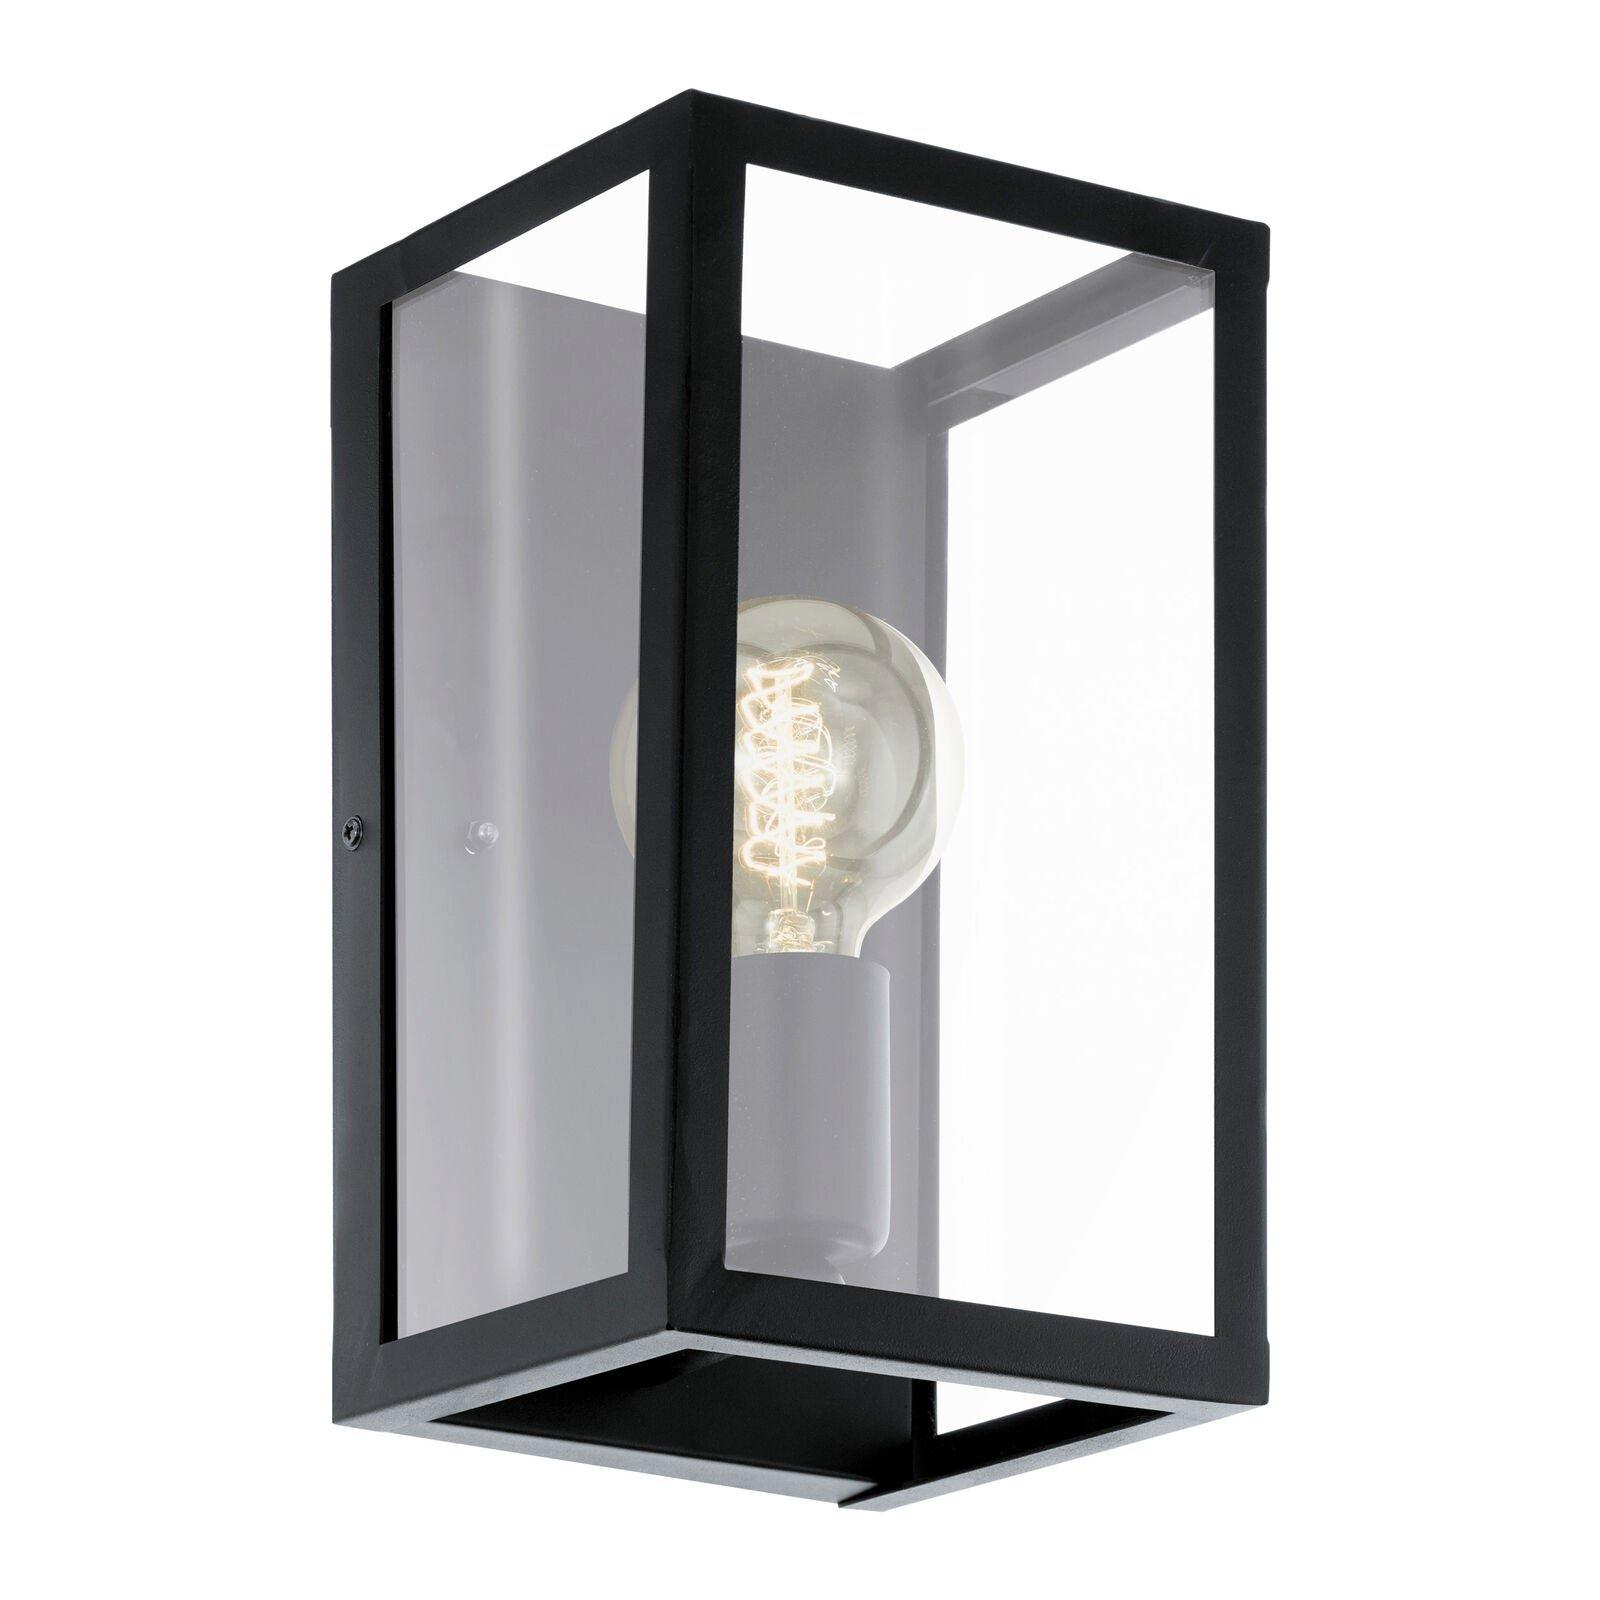 LED Wall Light / Sconce Black Steel & Clear Glass Box Shade 1 x 60W E27 Bulb